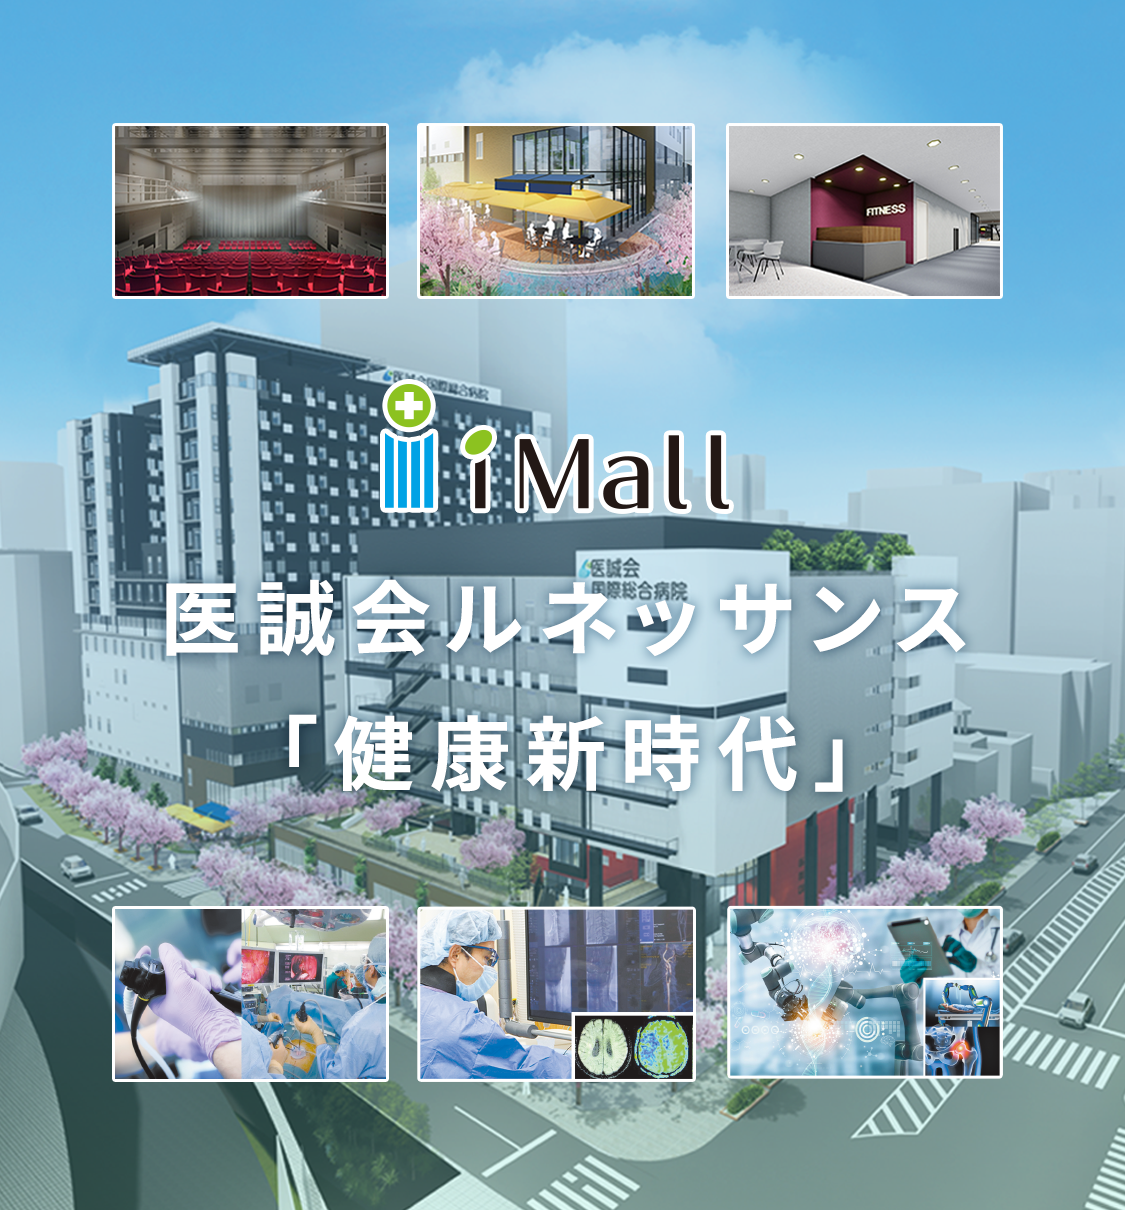 i-Mall 医誠会ルネッサンス「健康新時代」